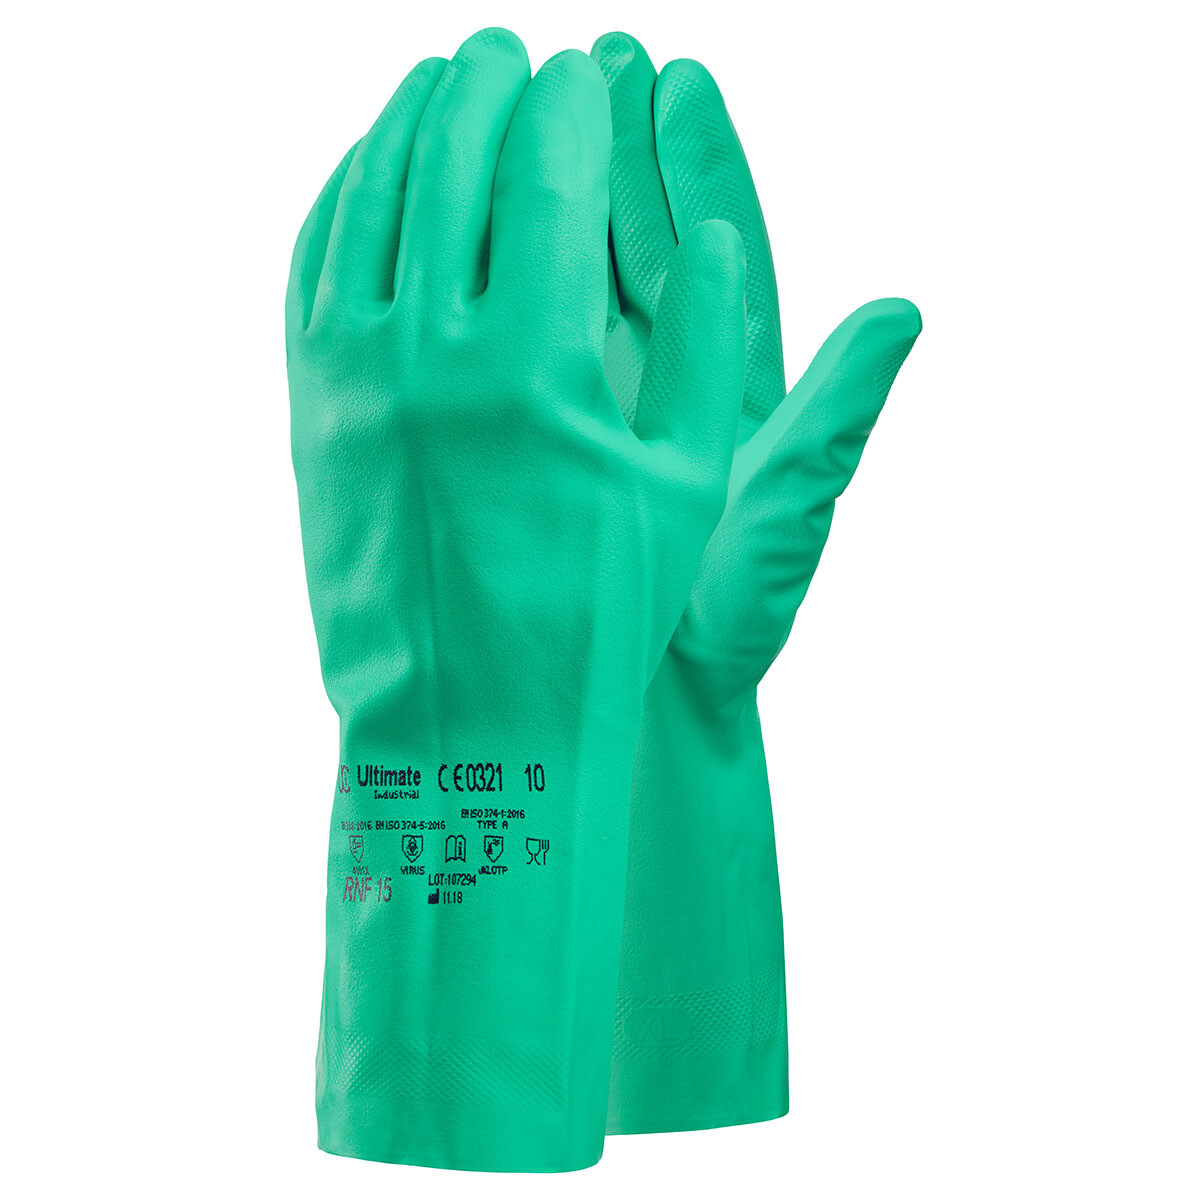 13" Long Green Nitrite Gloves Large